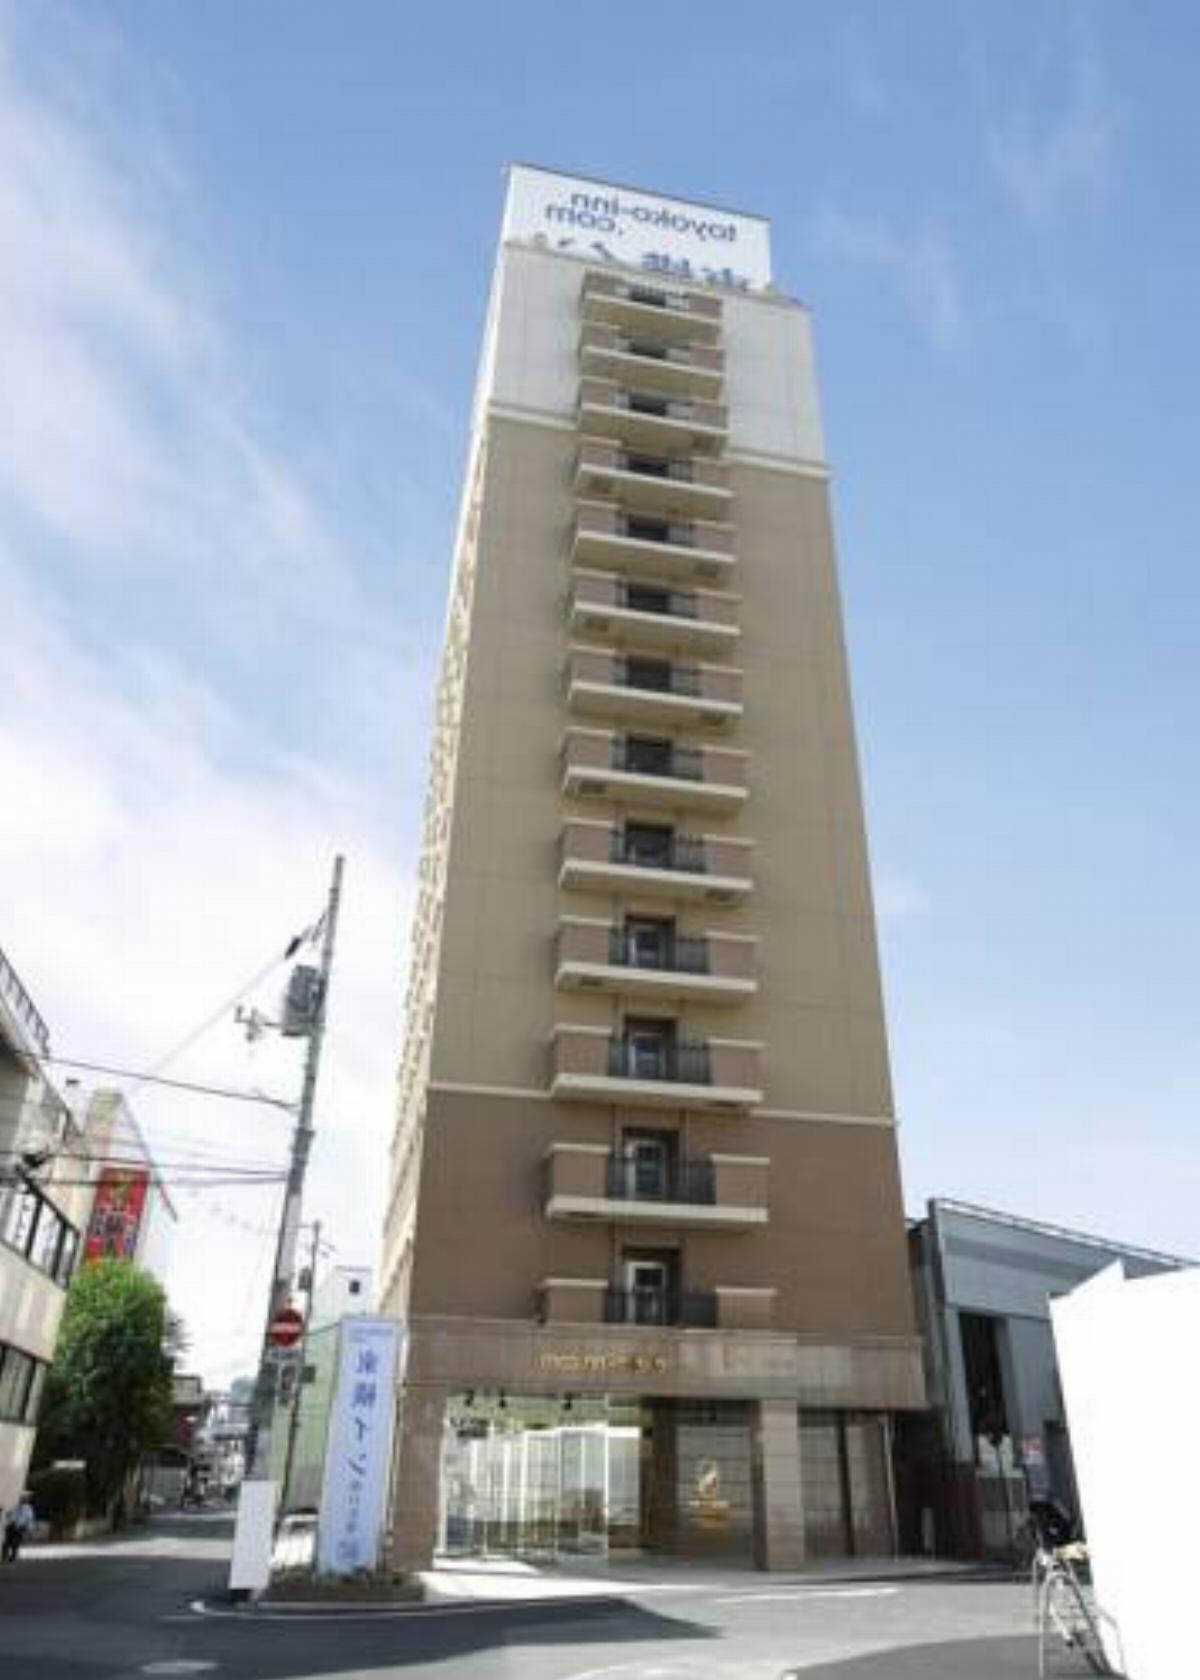 Toyoko Inn Okayama-eki Nishiguchi Hiroba Hotel Okayama Japan